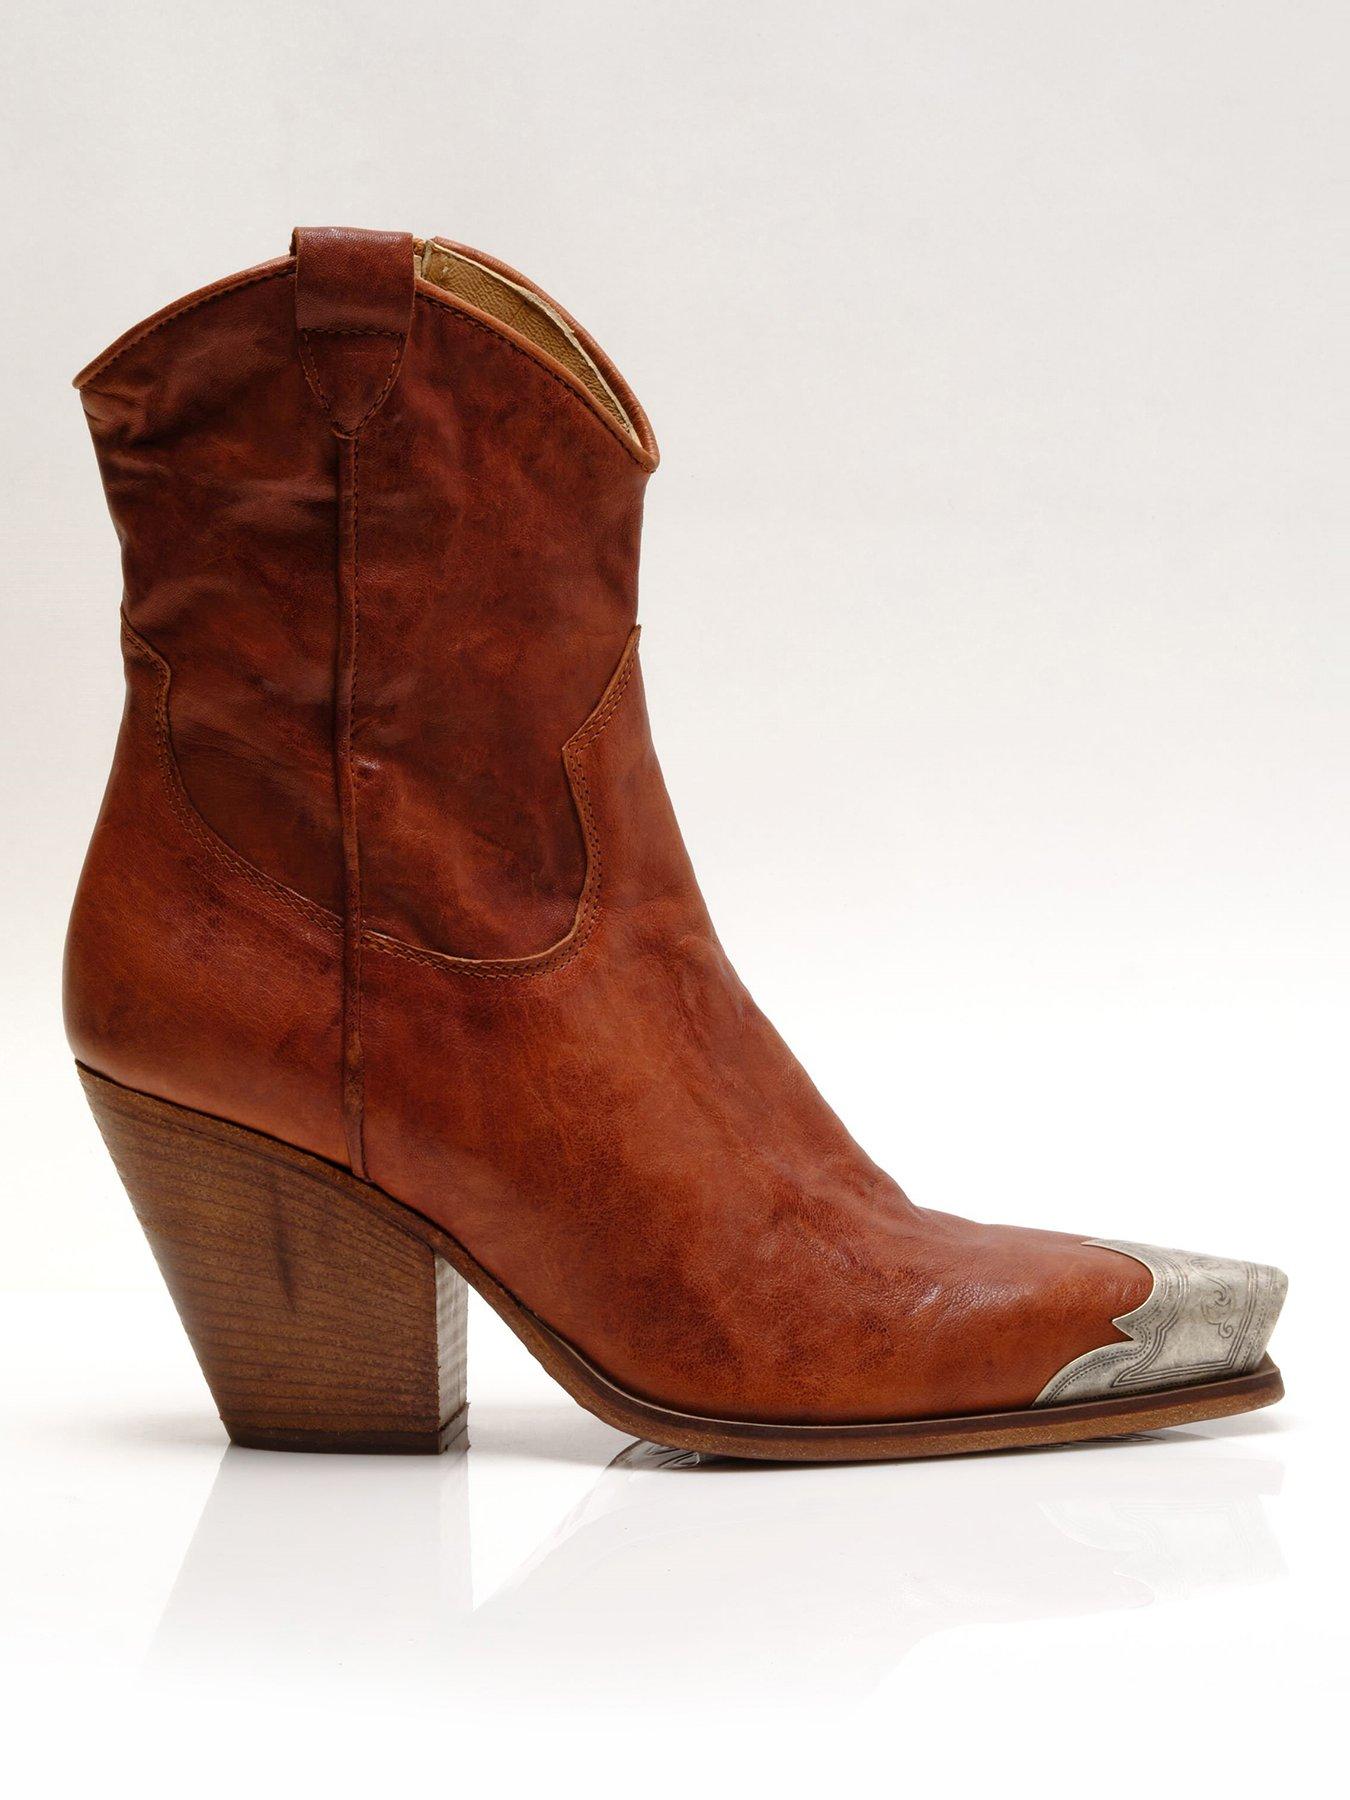 Brayden Western Boots  Boots, Western boots, Cowboy boots women